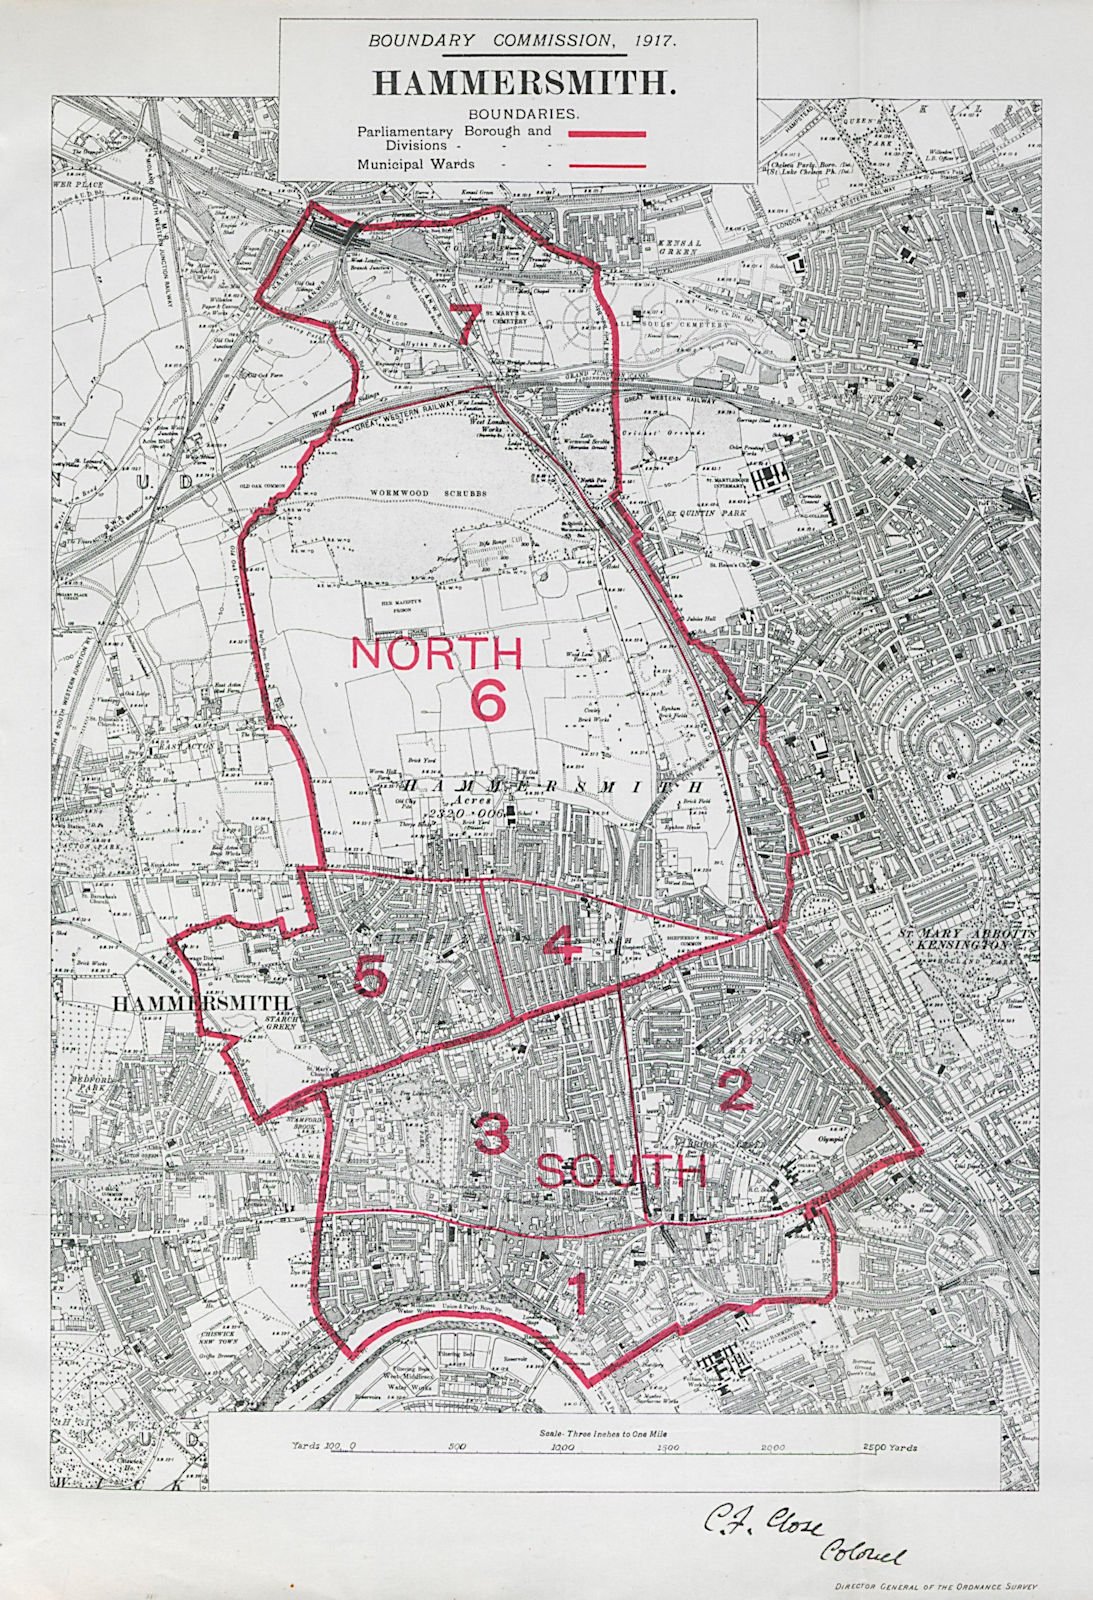 Hammersmith Parliamentary Borough. Shepherds Bush. BOUNDARY COMMISSION 1917 map